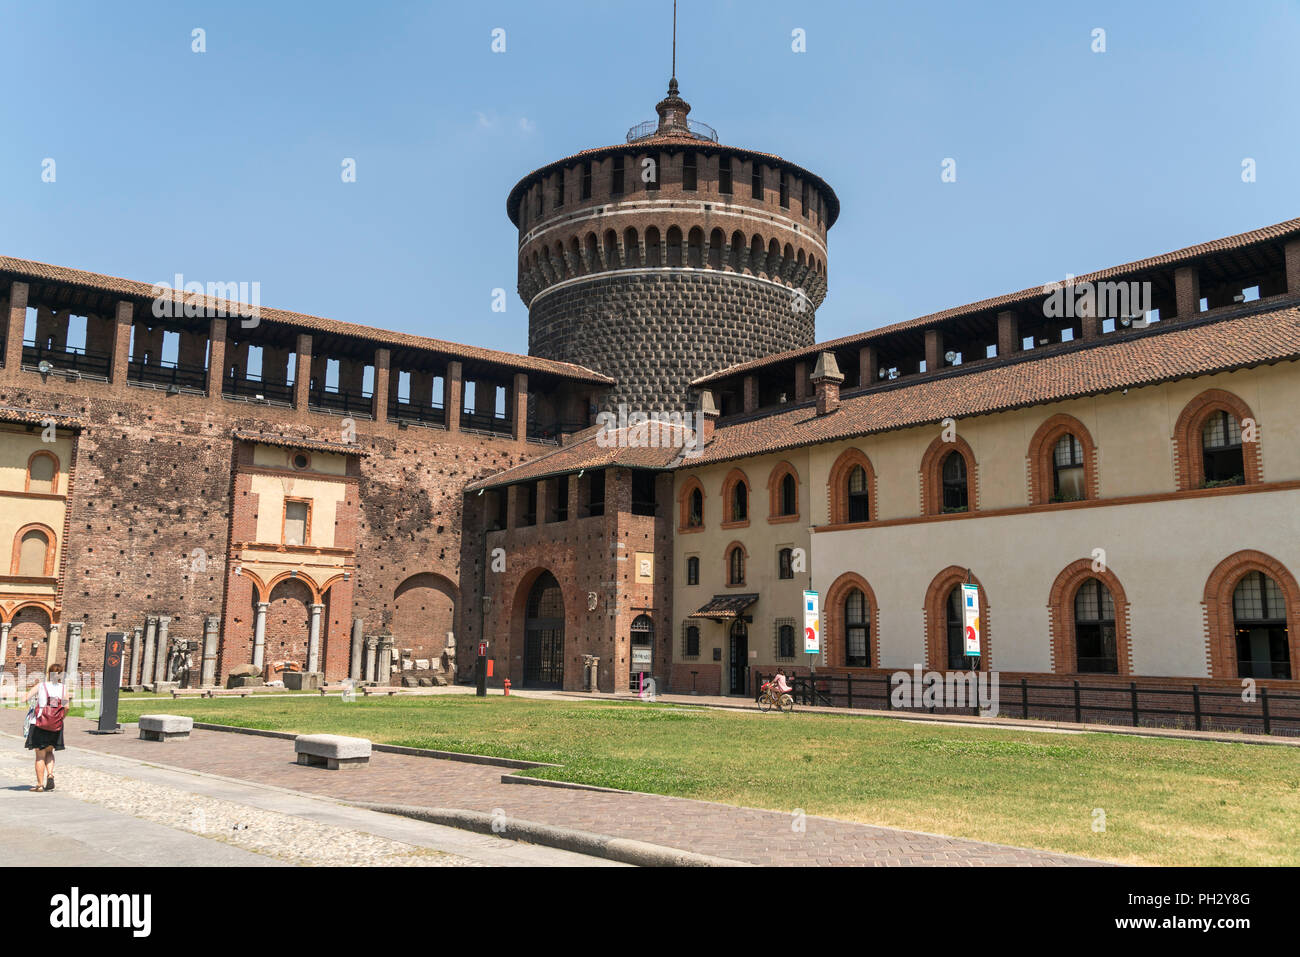 Innenhof des Castello Sforzesco, Mailand, Lombardei, Italien  |  courtyard of the Castello Sforzesco, Milan, Lombardy, Italy, Europe Stock Photo